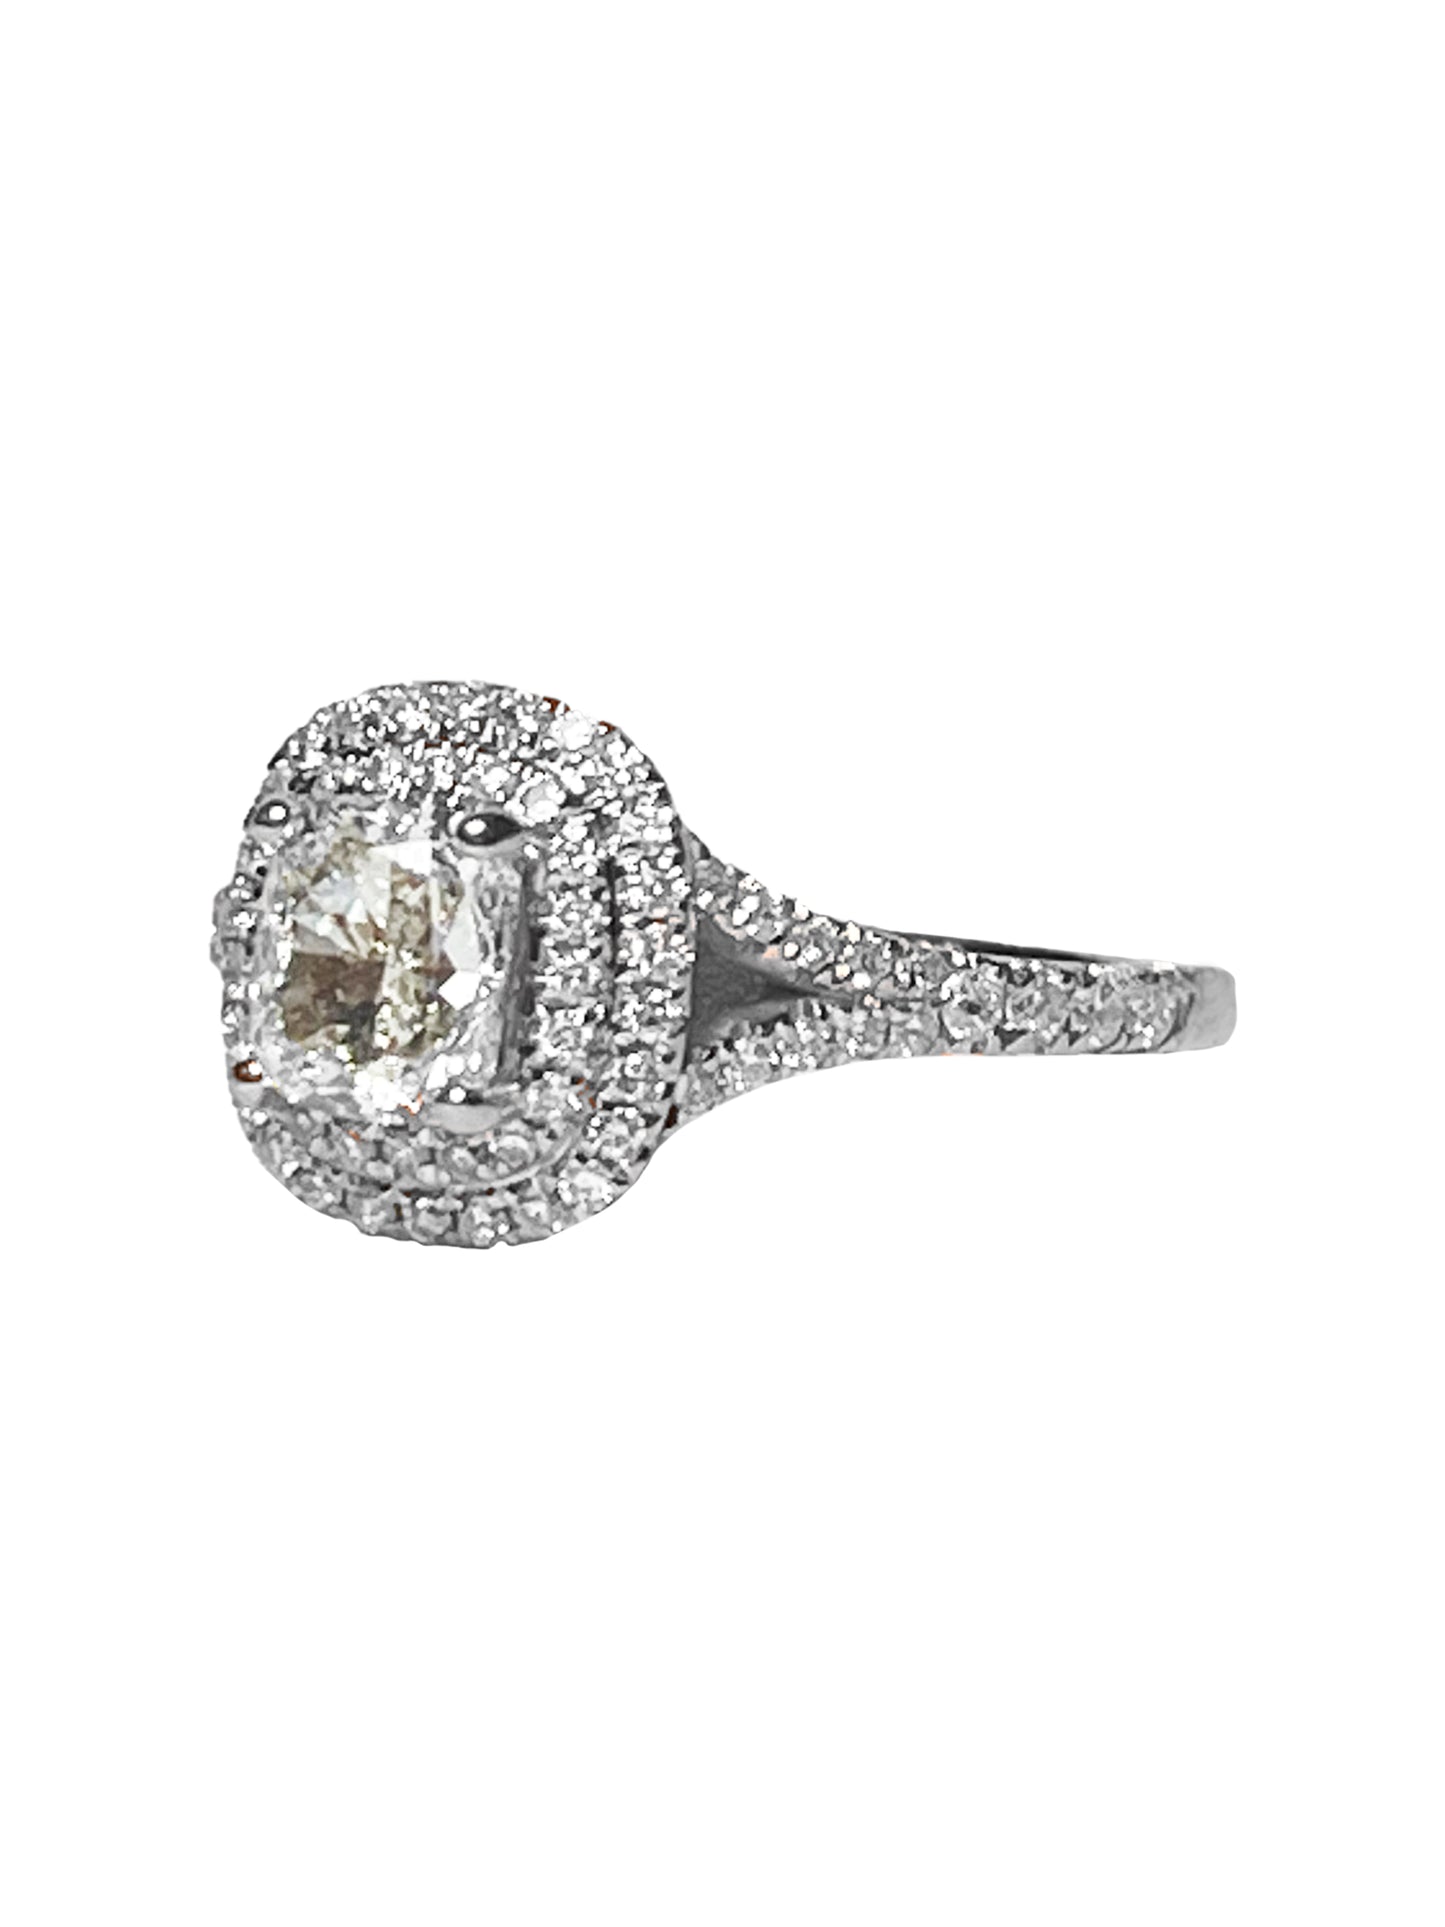 Double halo Cushion diamond ring in Pavé setting